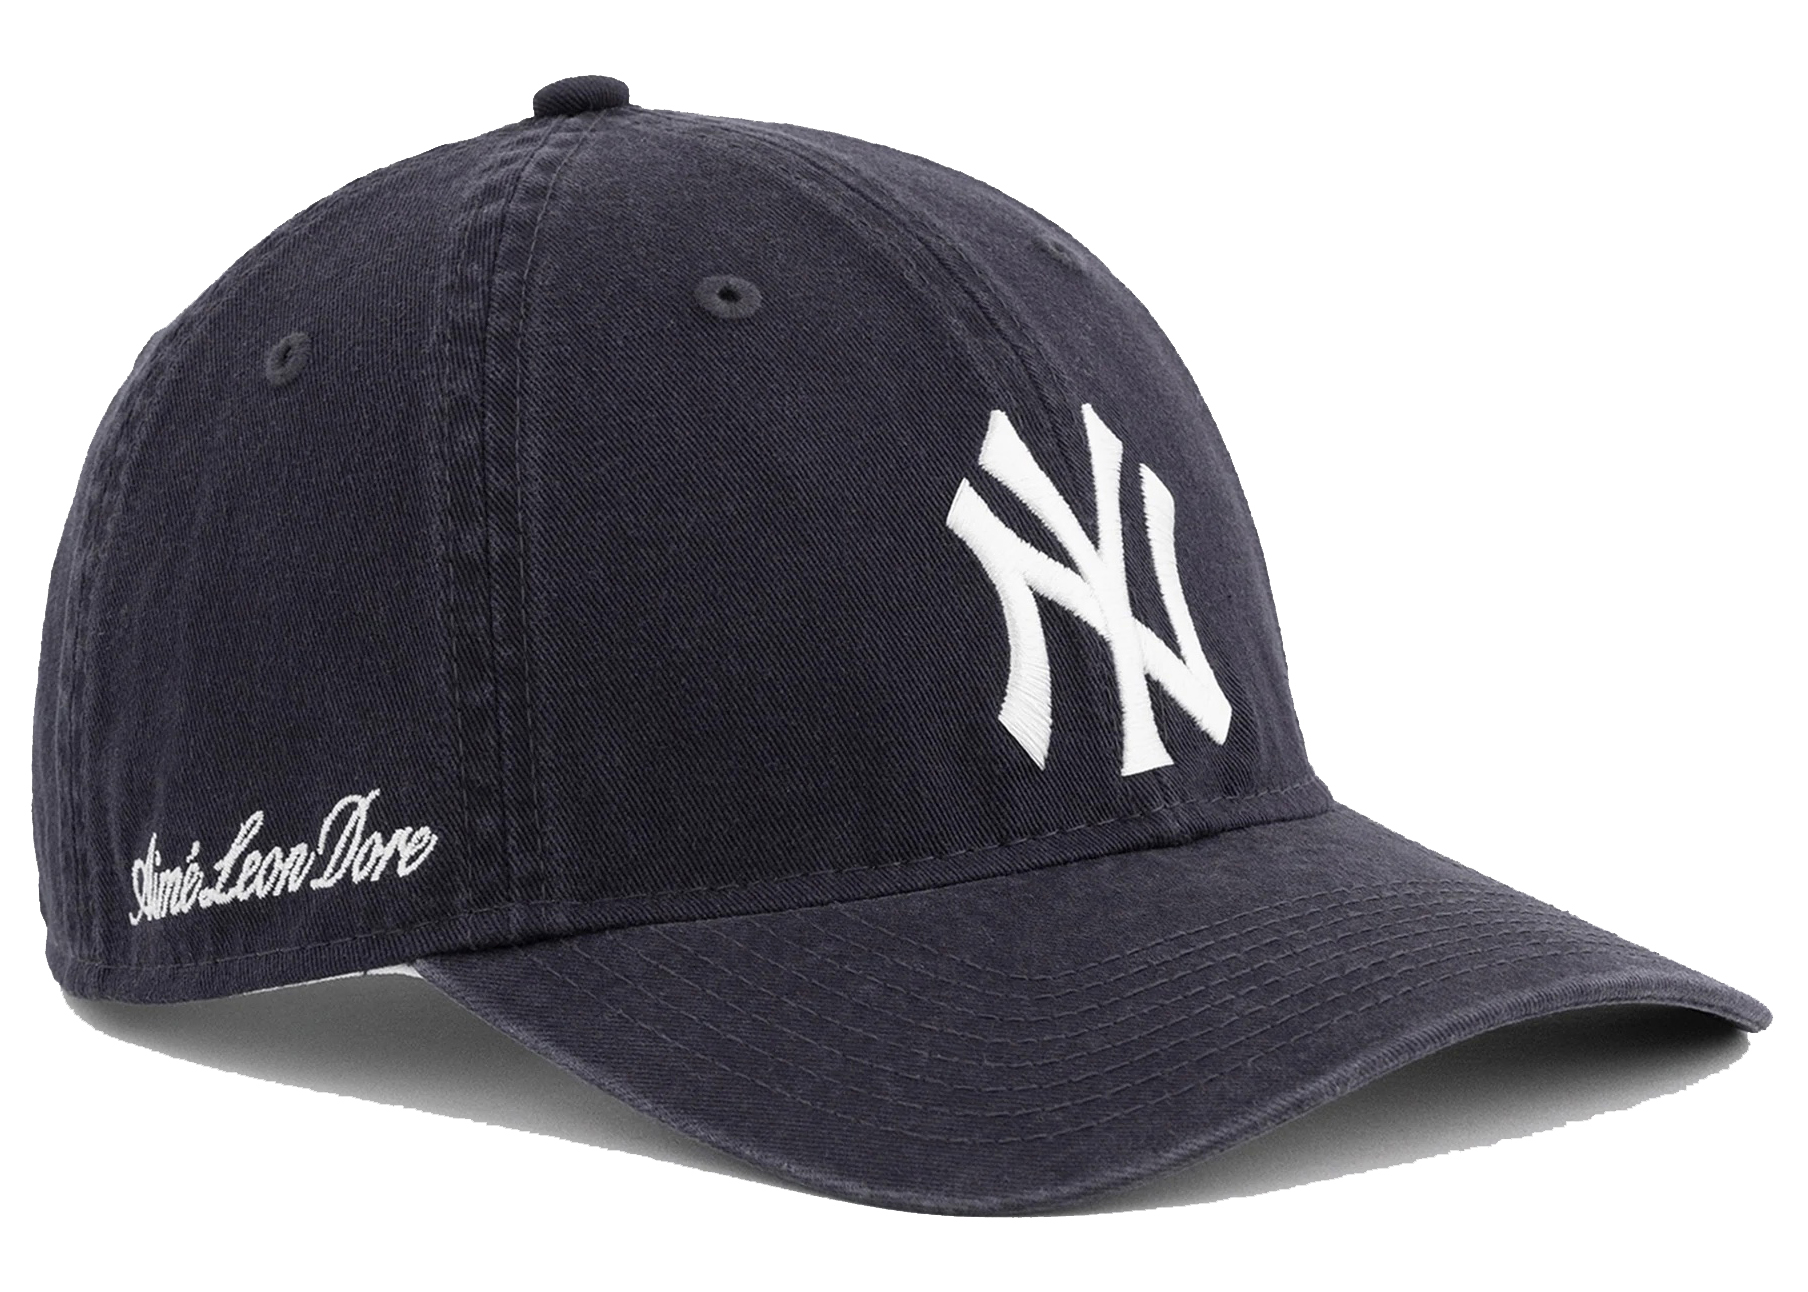 SupALD New Era Yankees Ballpark Hat